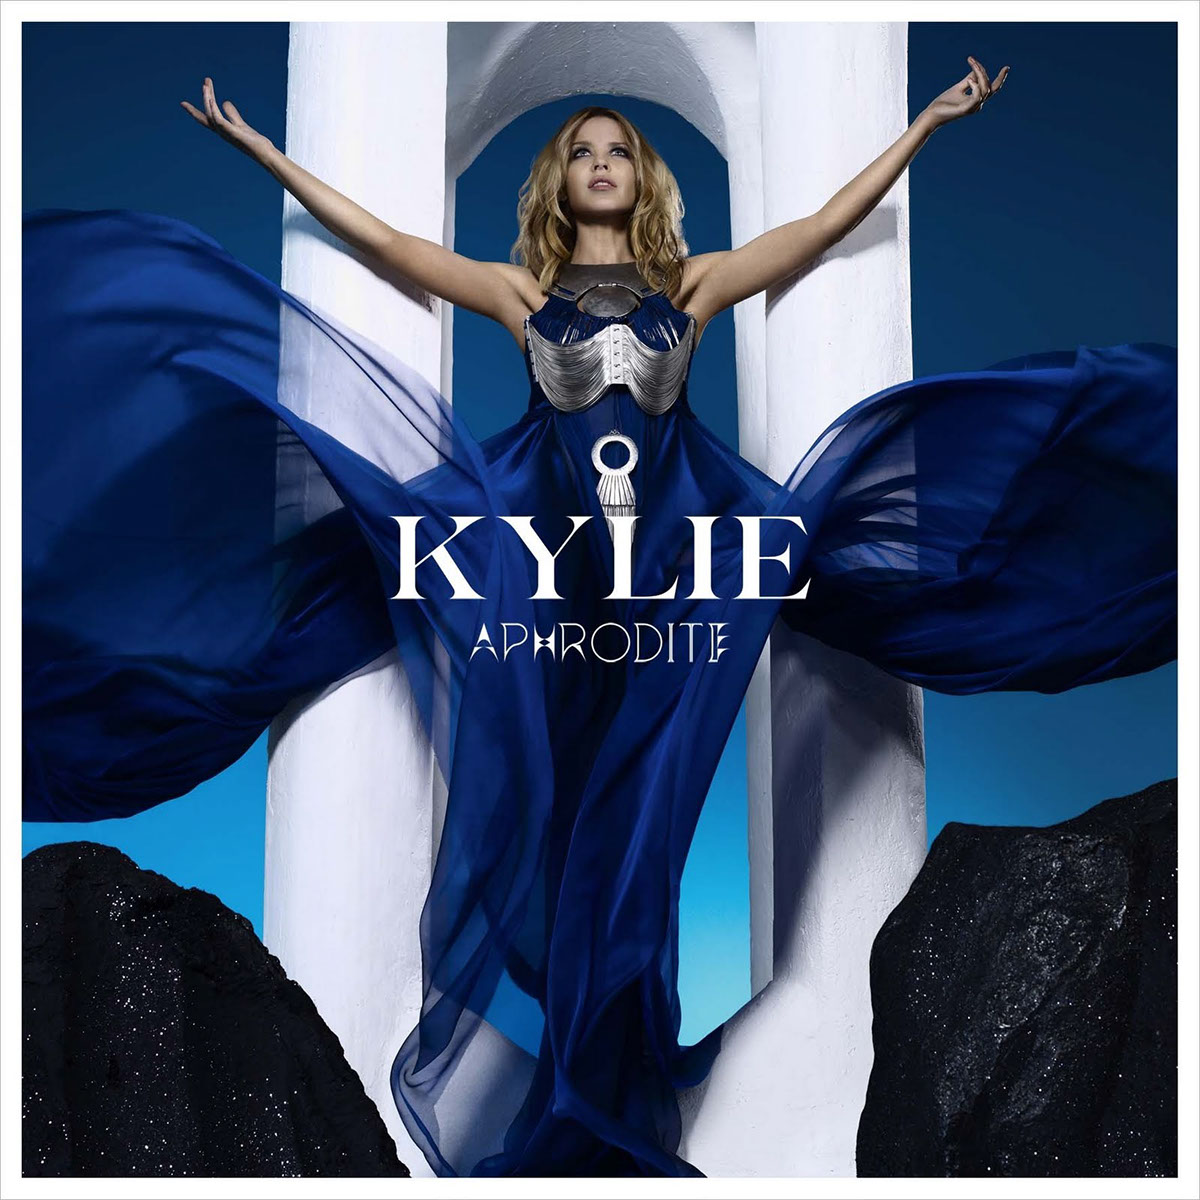 Coldplay Viva La Vida kylie Kylie Minogue Aphrodite grace jones hurricane White Lies ritual Twins The Cheek Just One Night Young Knives Abundance Album cover Phil Crisp